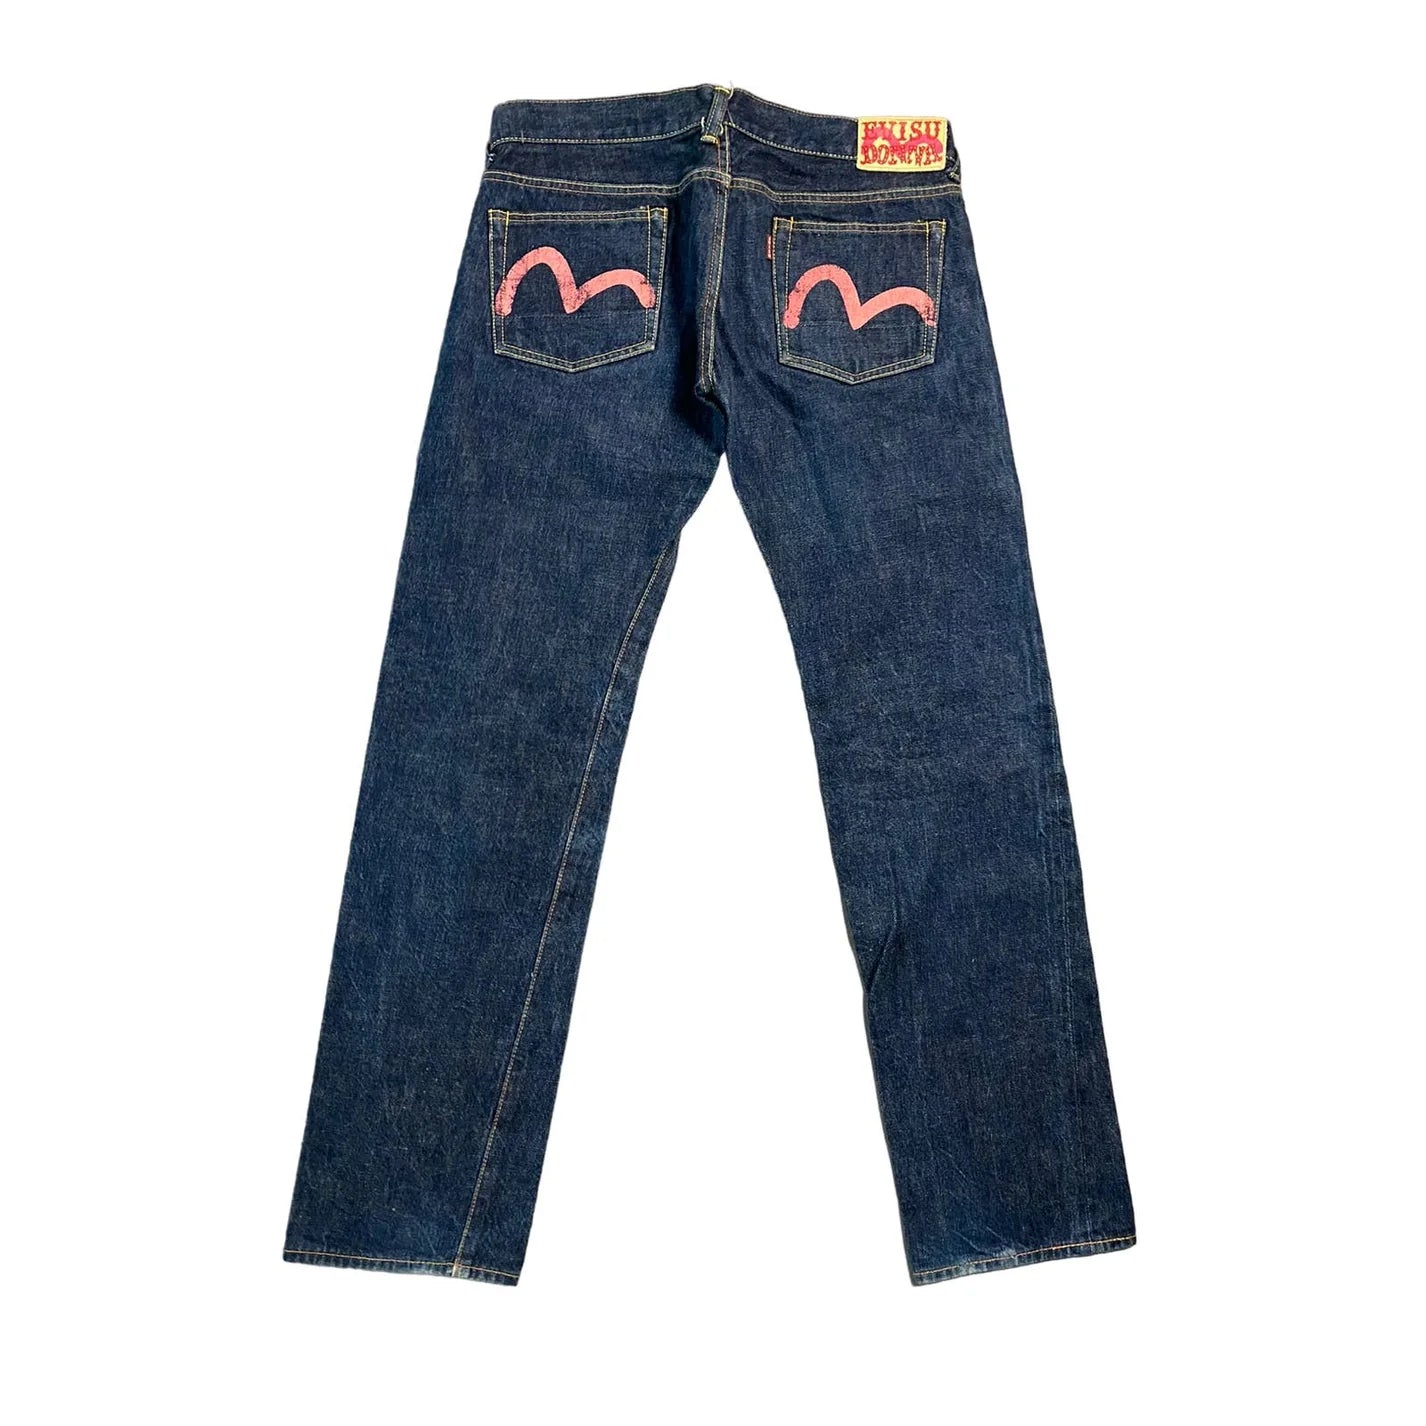 Evisu Donna Vintage Navy Jeans Pink Seagull Selvedge Japan Lodz Polska tyl